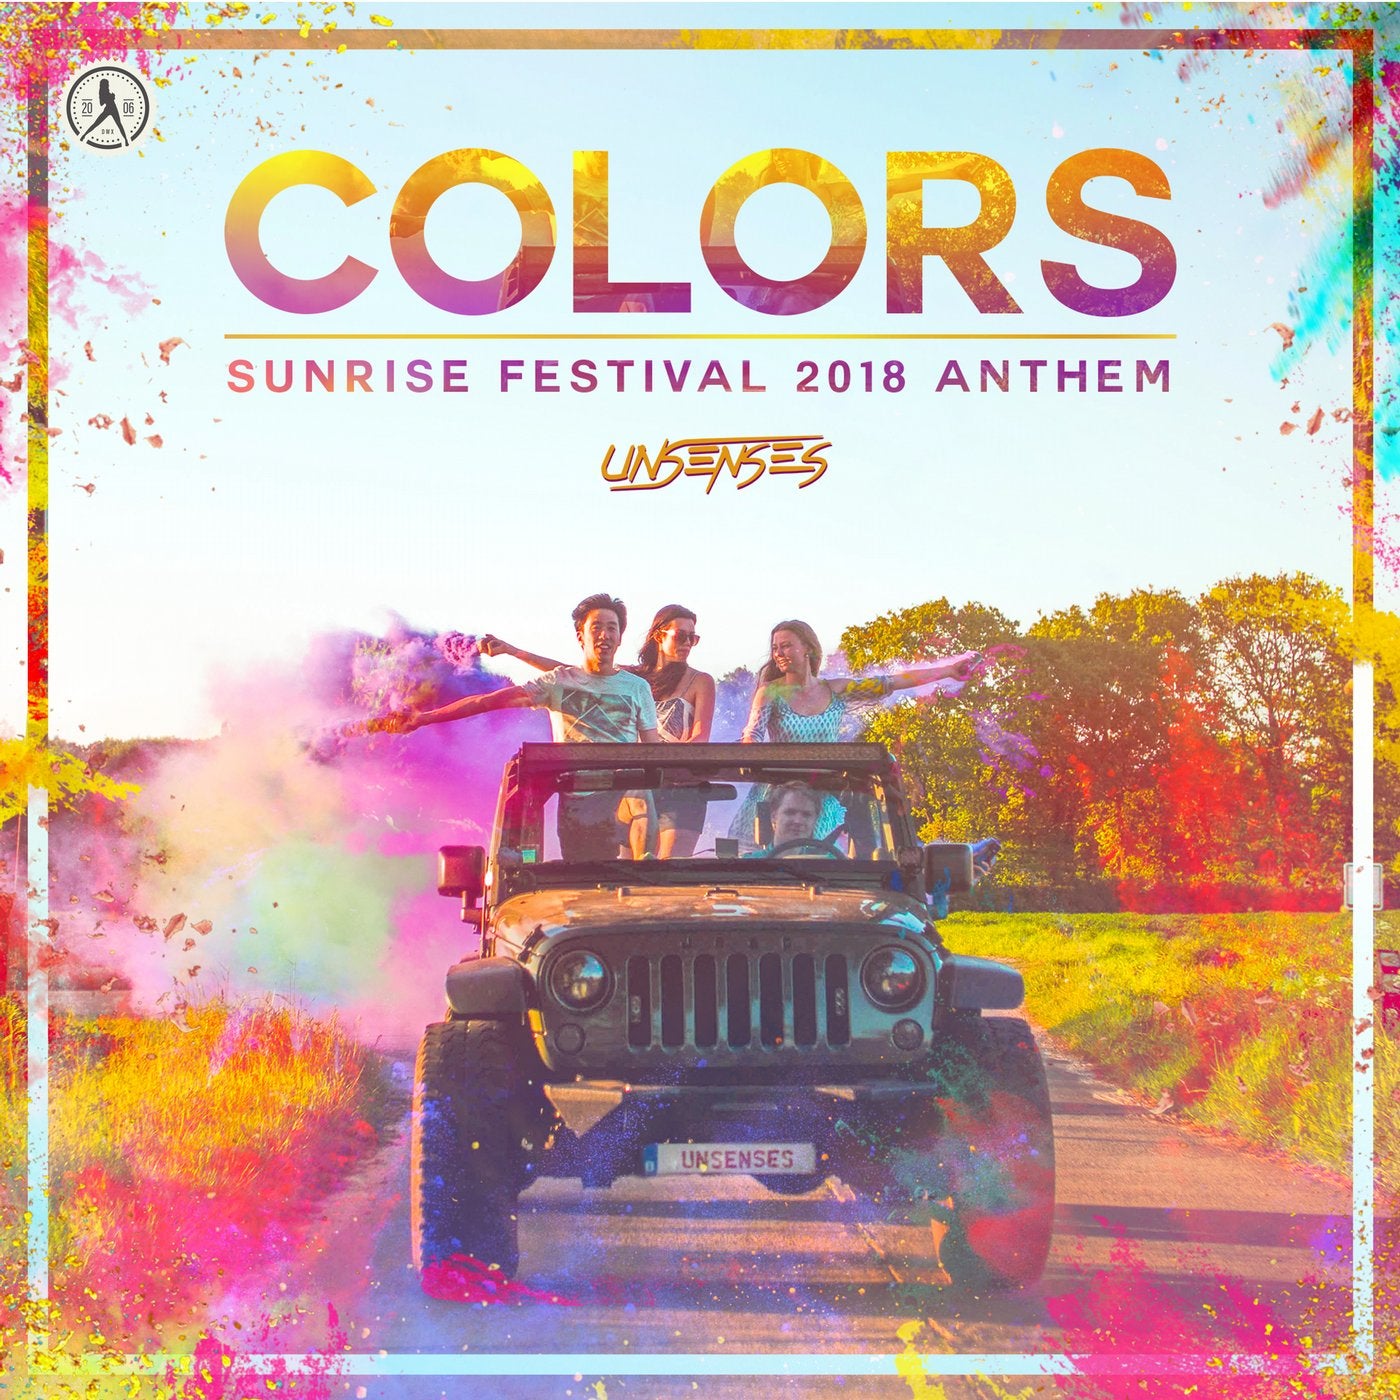 Colors (Sunrise Festival 2018 Anthem)